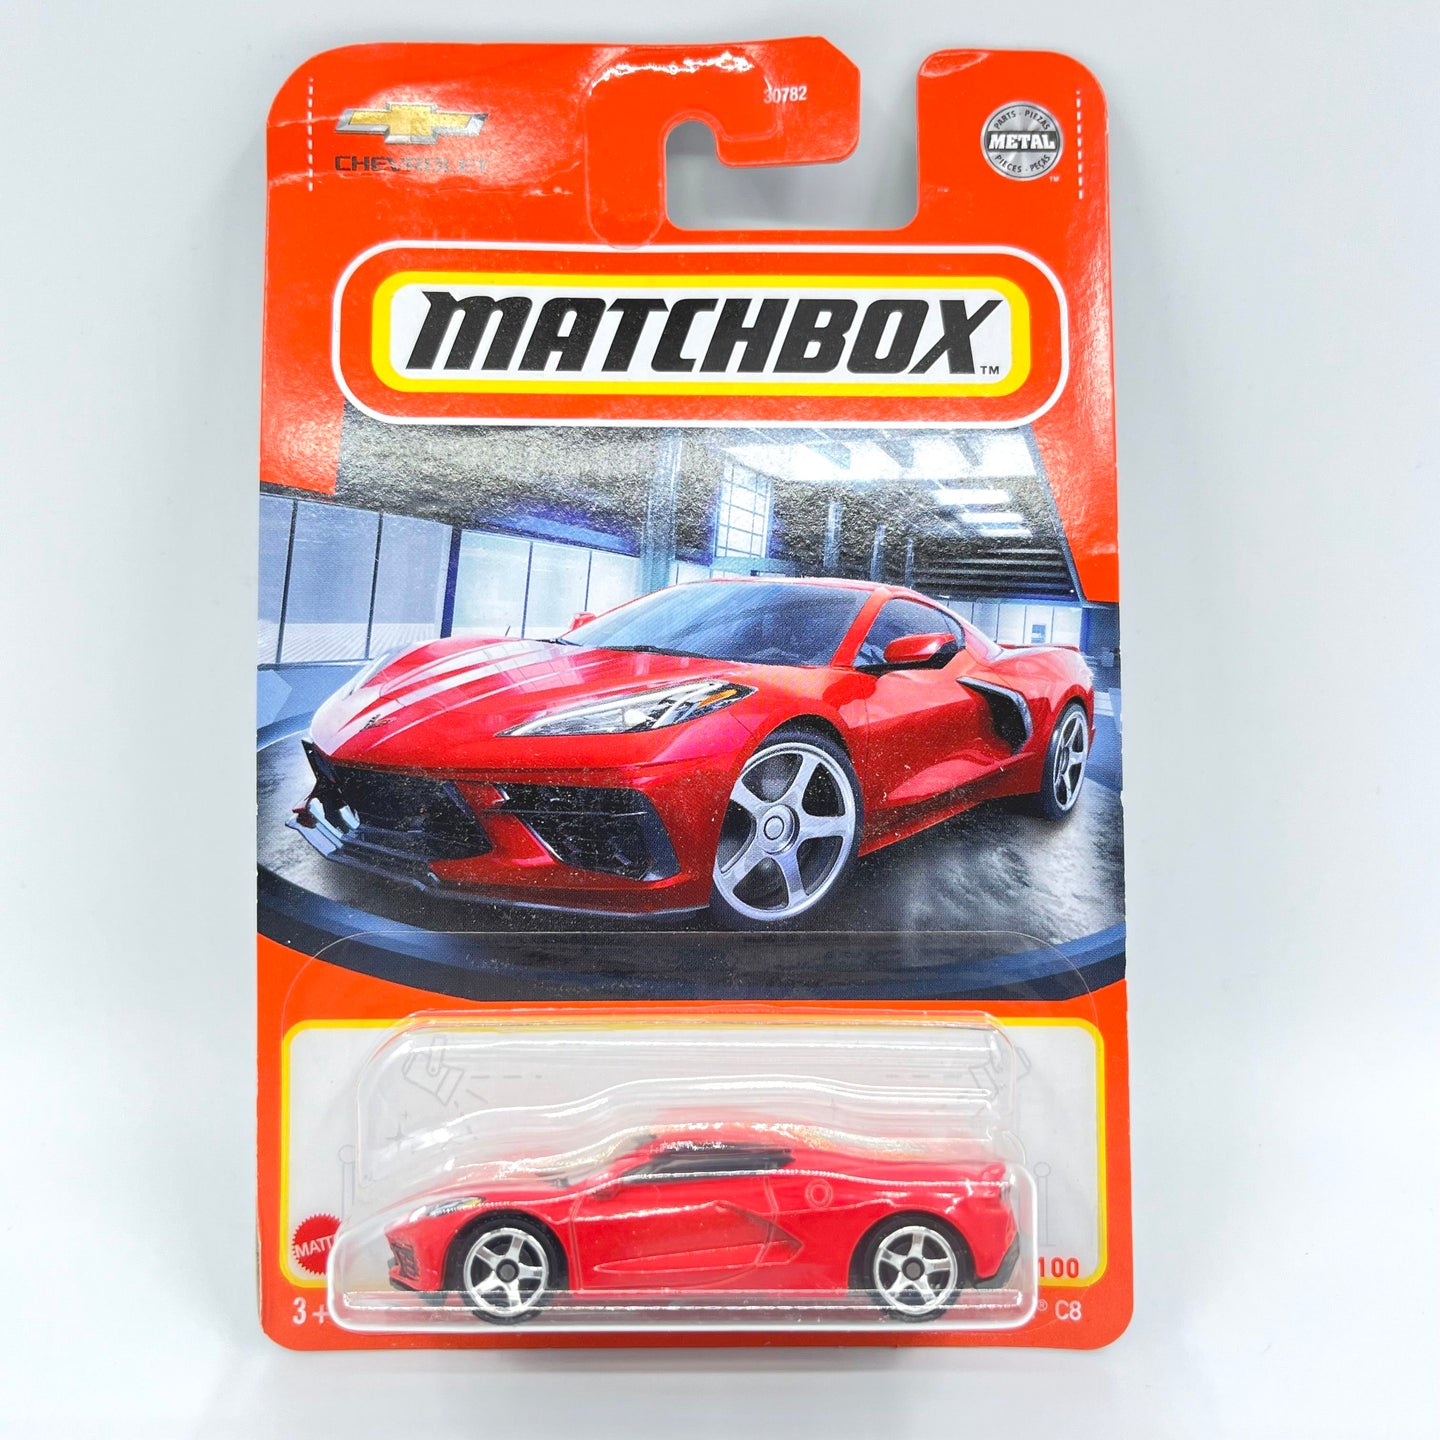 2020 Corvette C8 Rare MatchBox Alloy Diecast Car Model